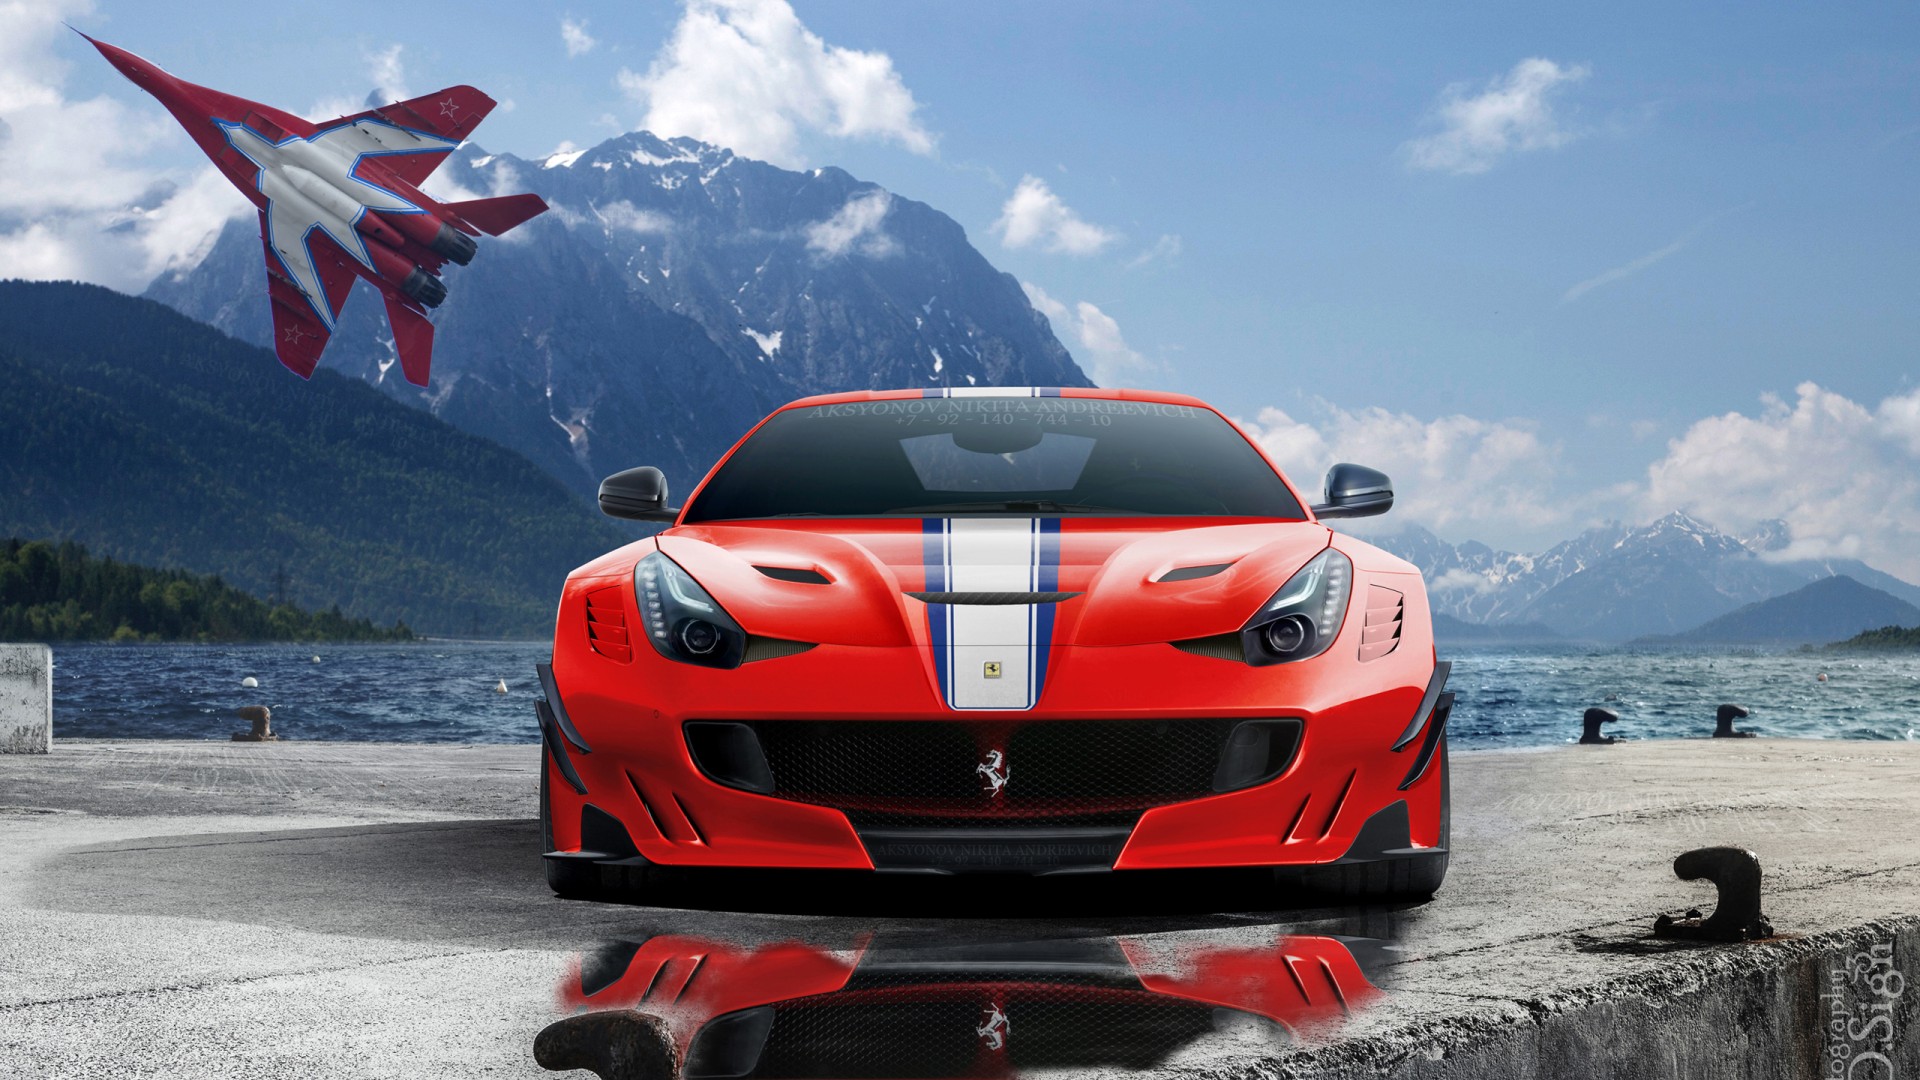 F12 Ferrari F12tdf Speciale Wallpaper | HD Car Wallpapers | ID #5920